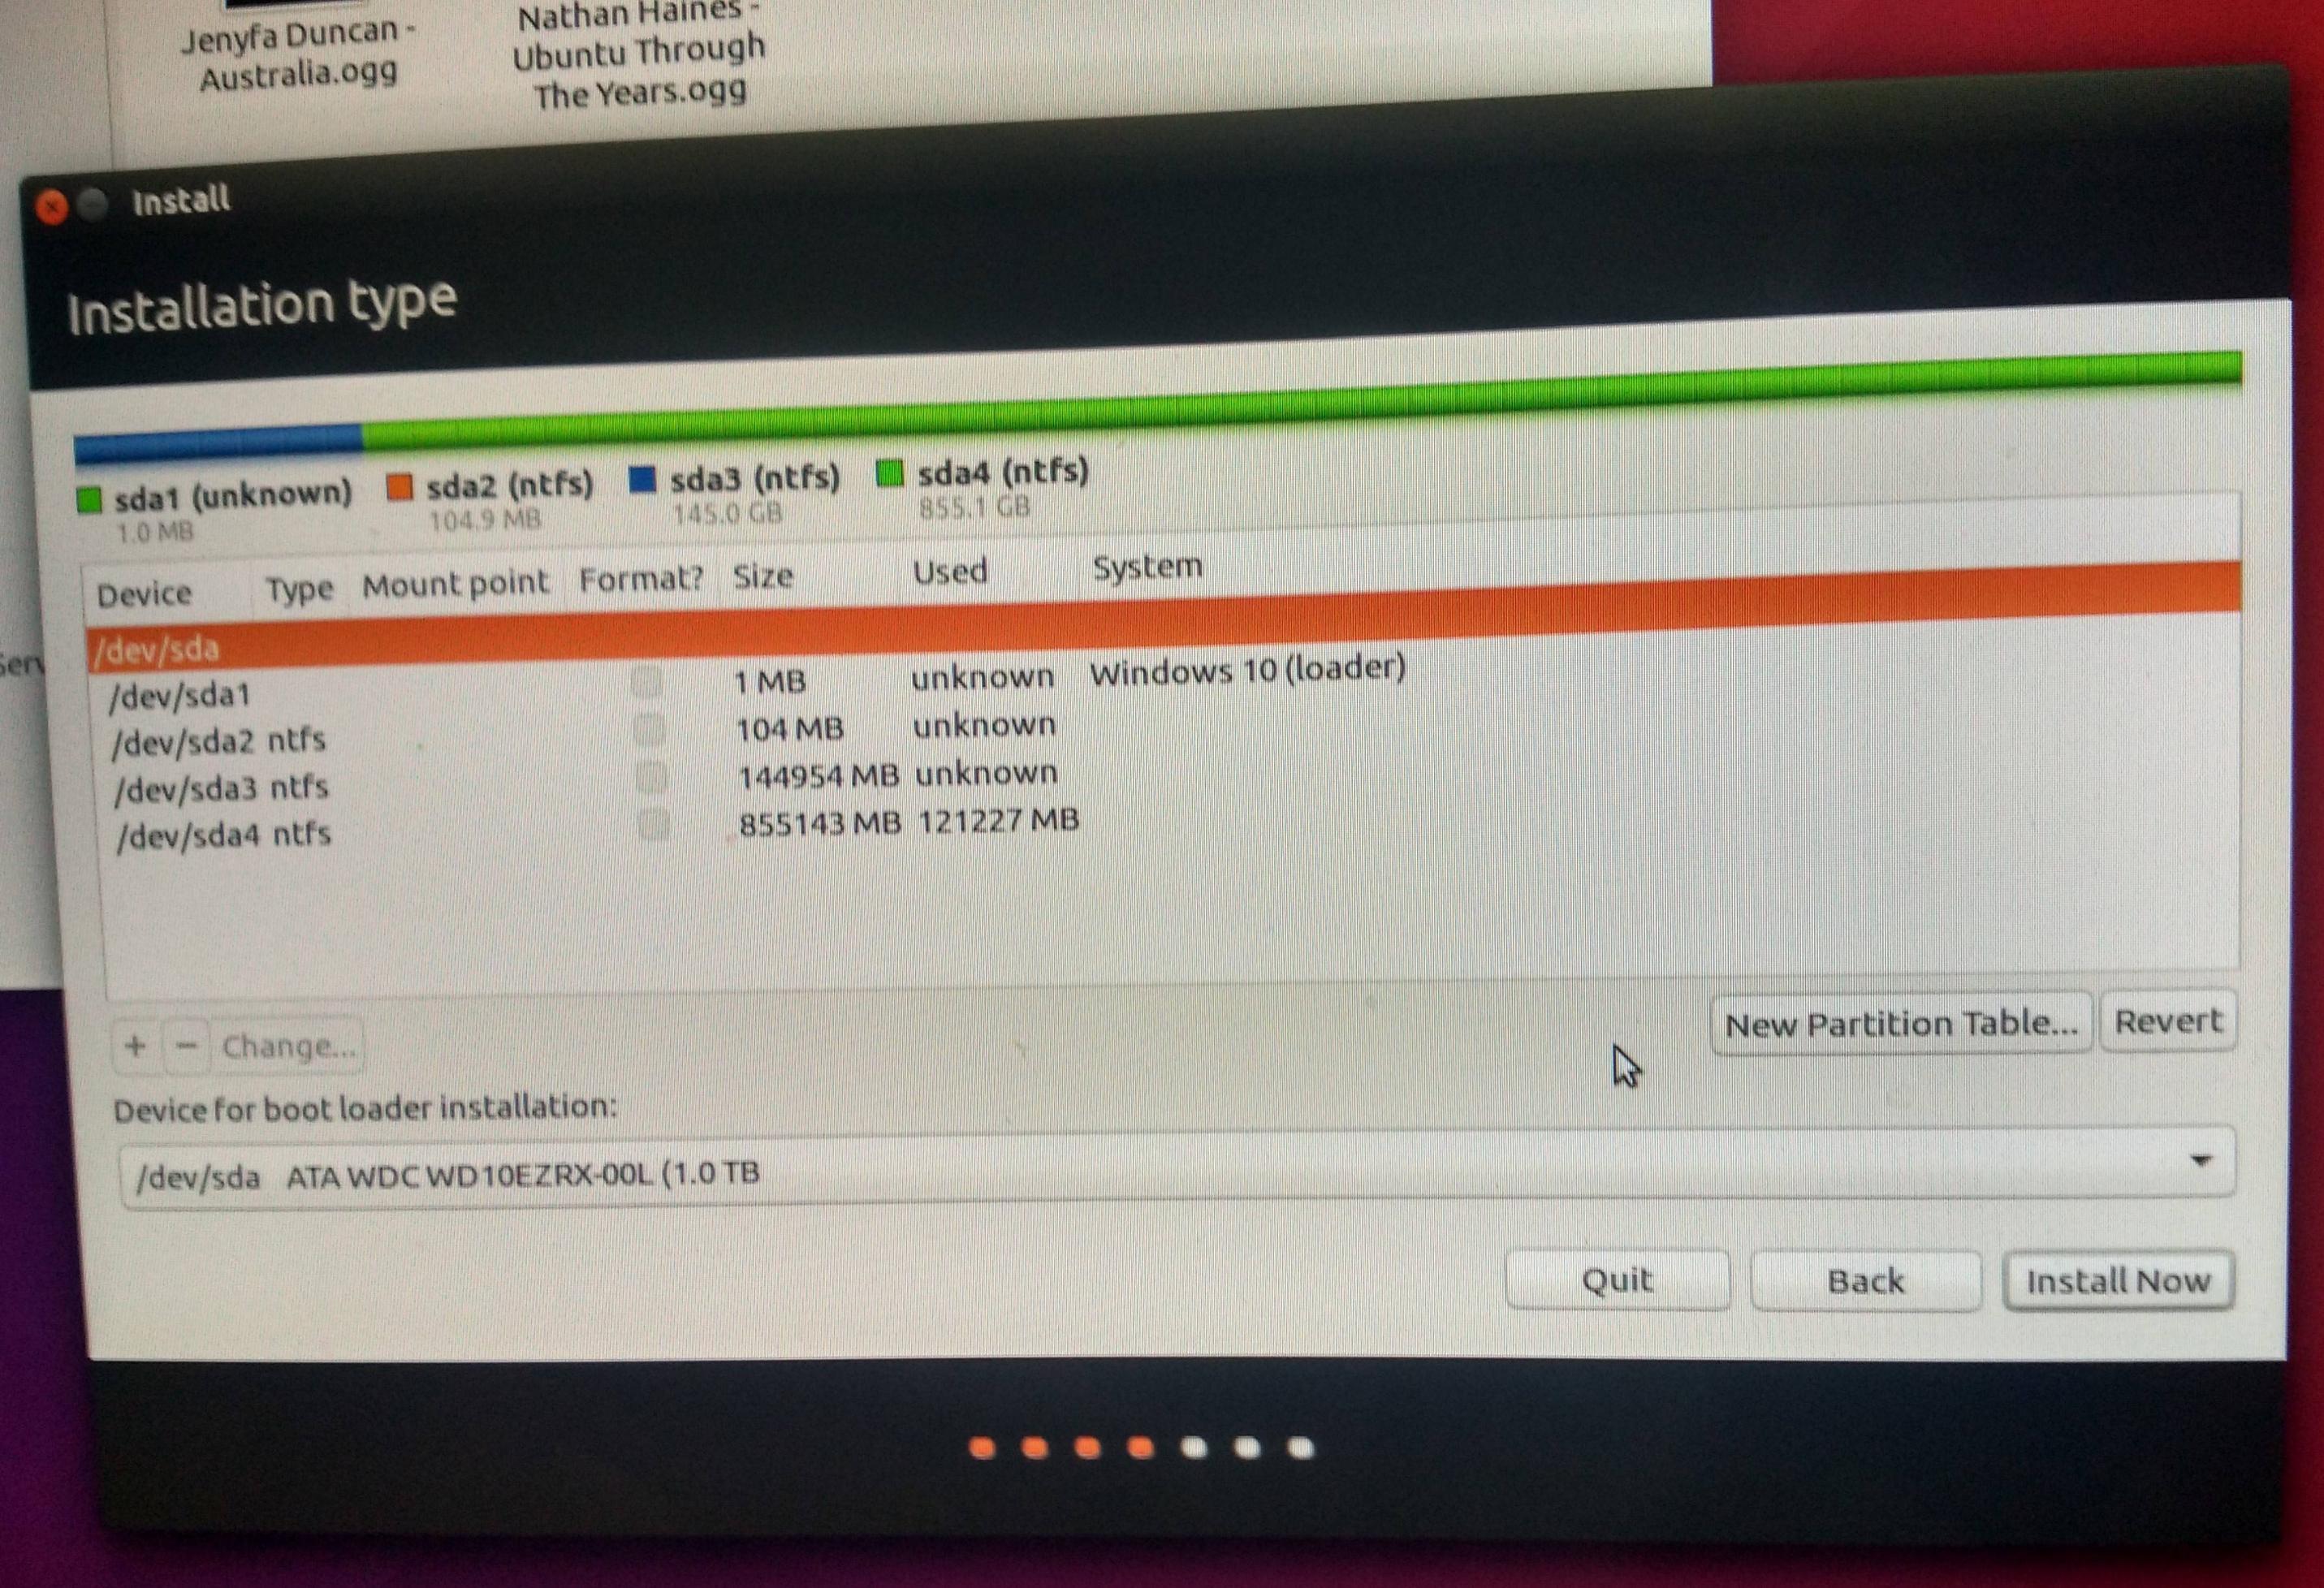 how do i install ubuntu for windows on a usb drive using mac